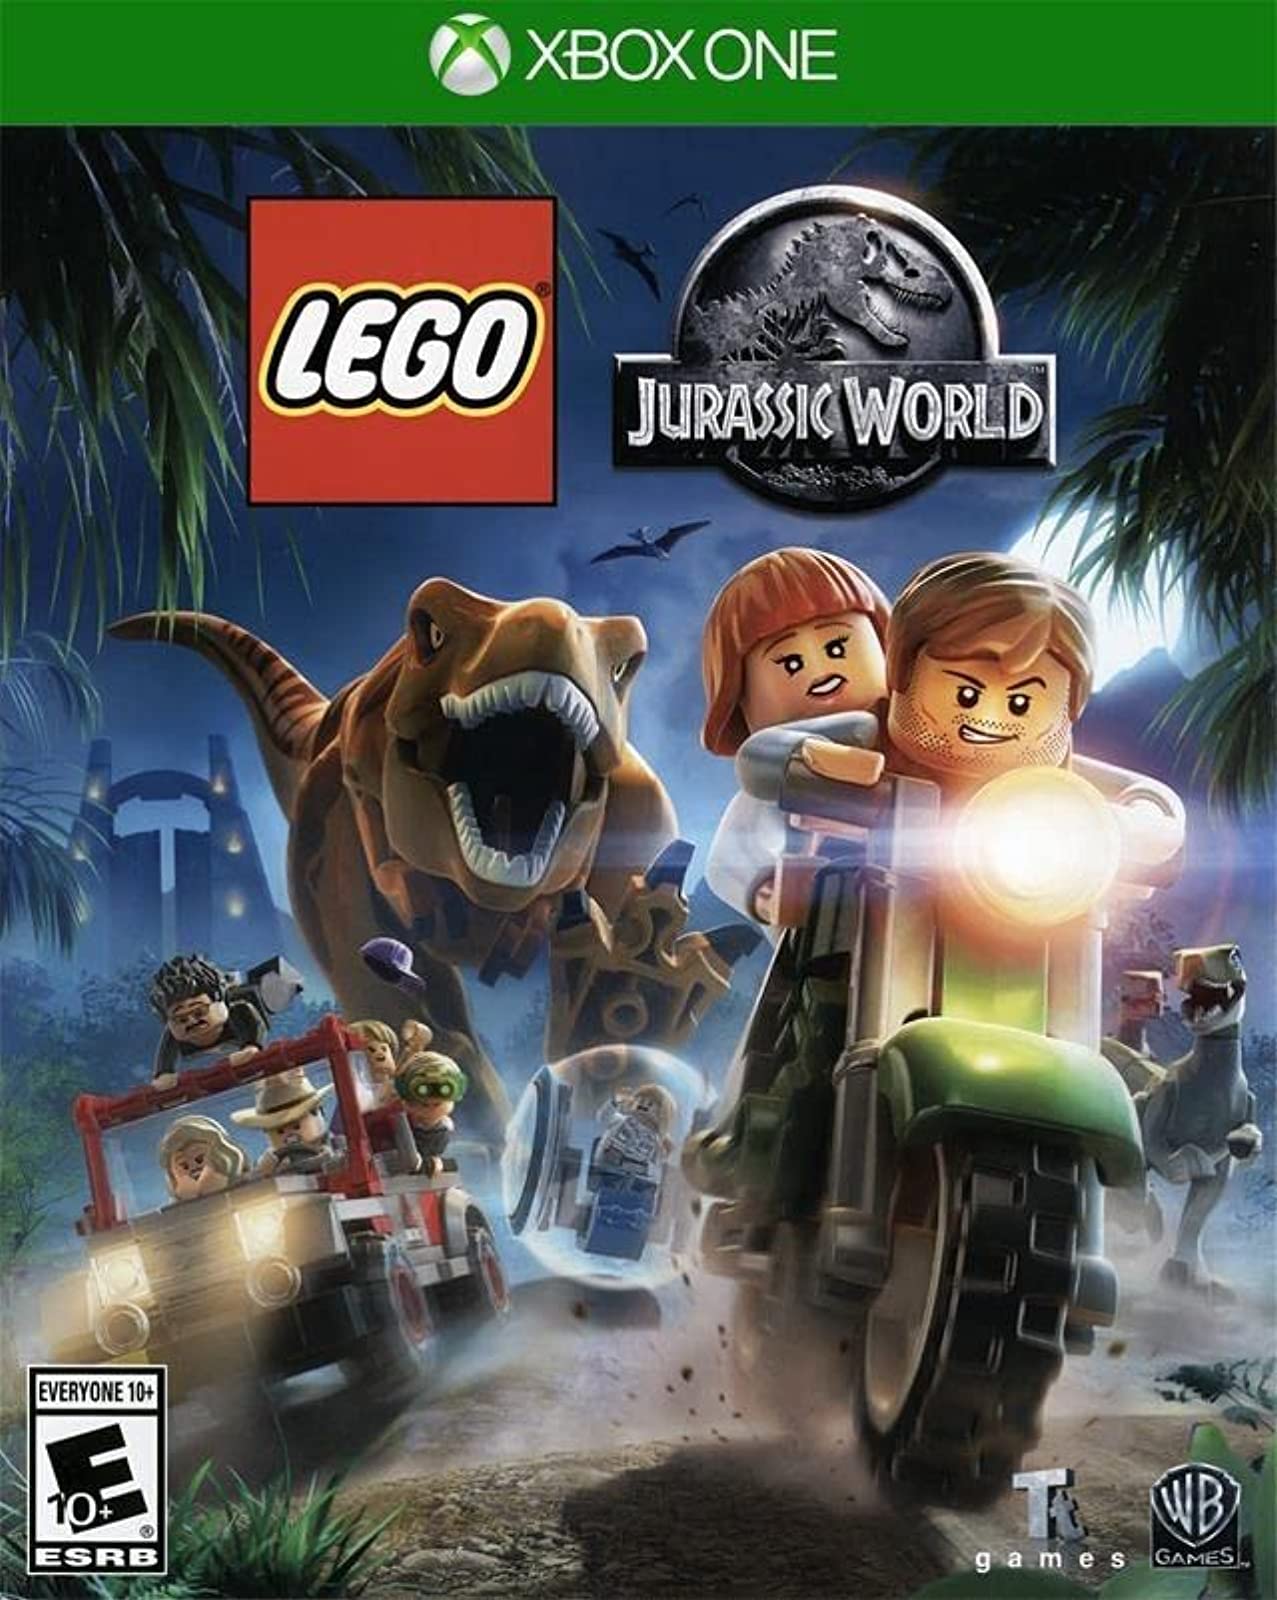 LEGO Jurassic World XBOX ONE X|S KEY